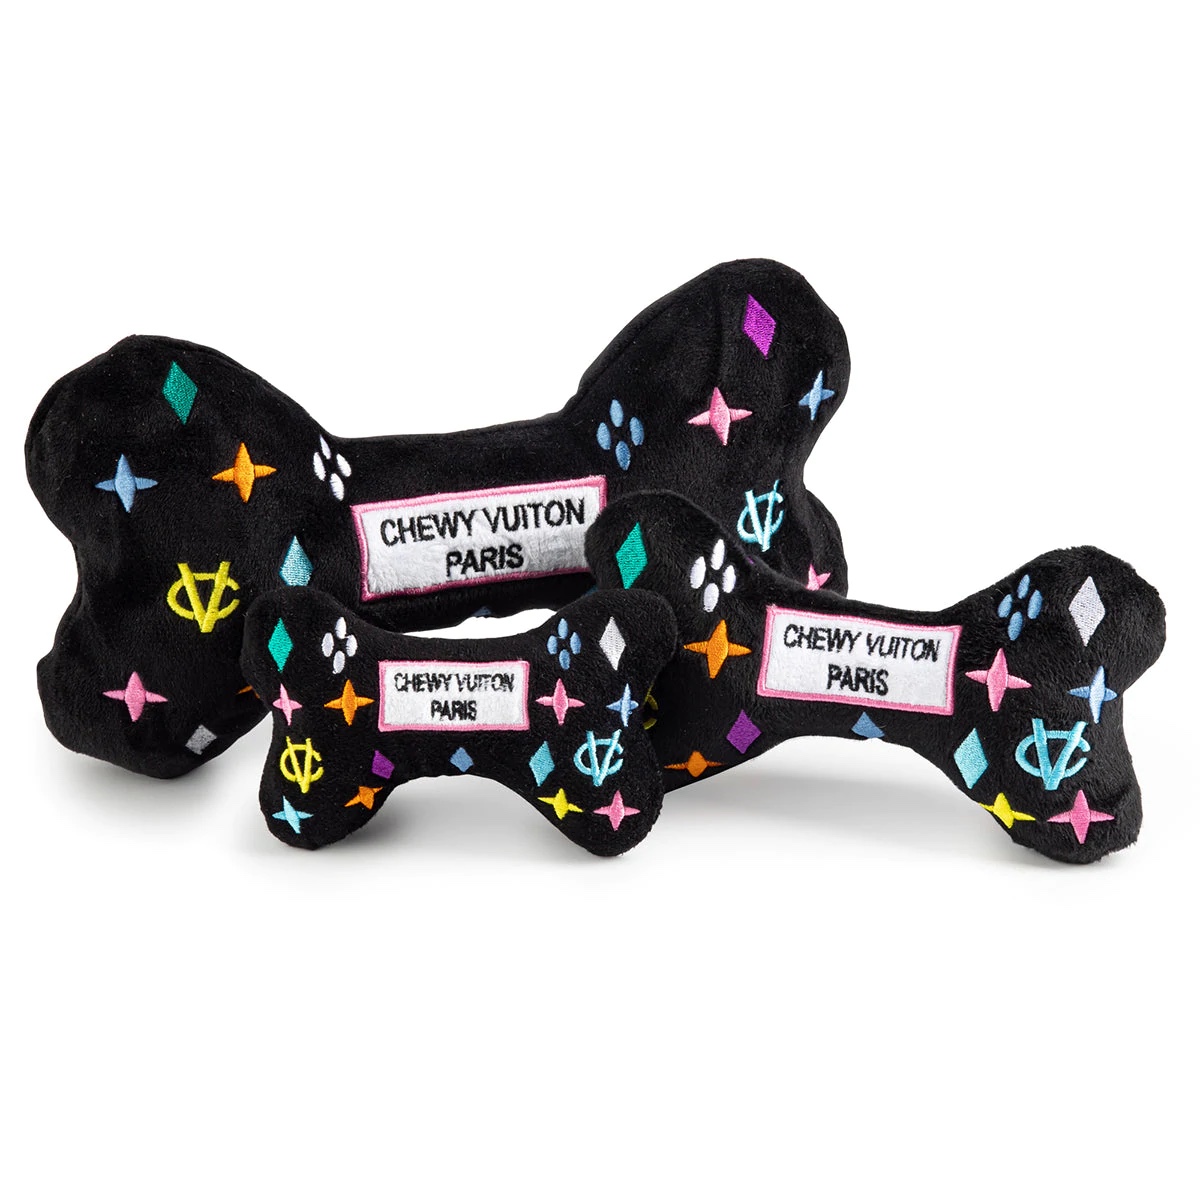 Haute Diggity Dog Chewy Vuiton hundleksak med pipljud svart monogram